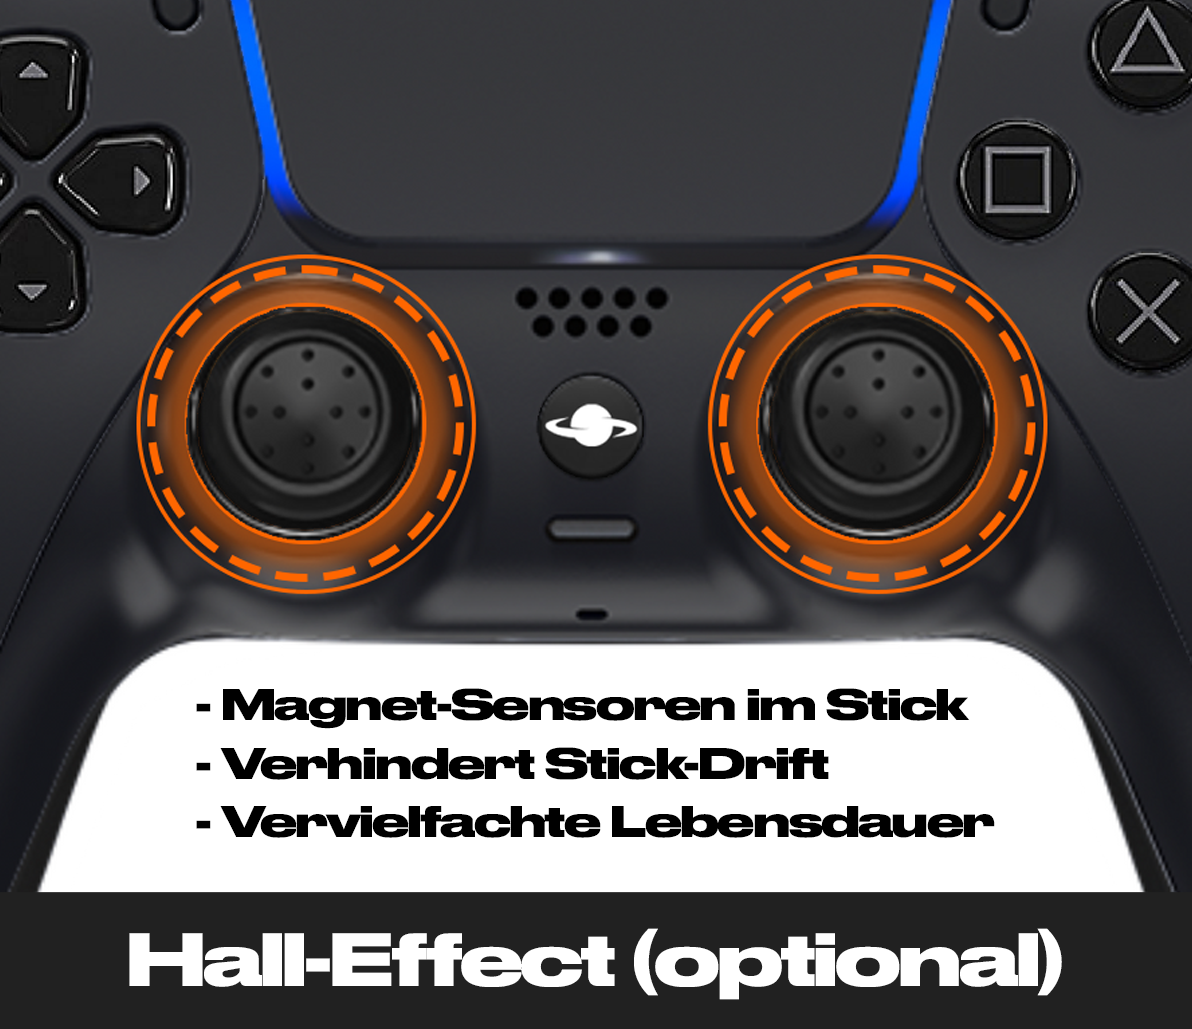 PS5 Custom Controller 'Blau'